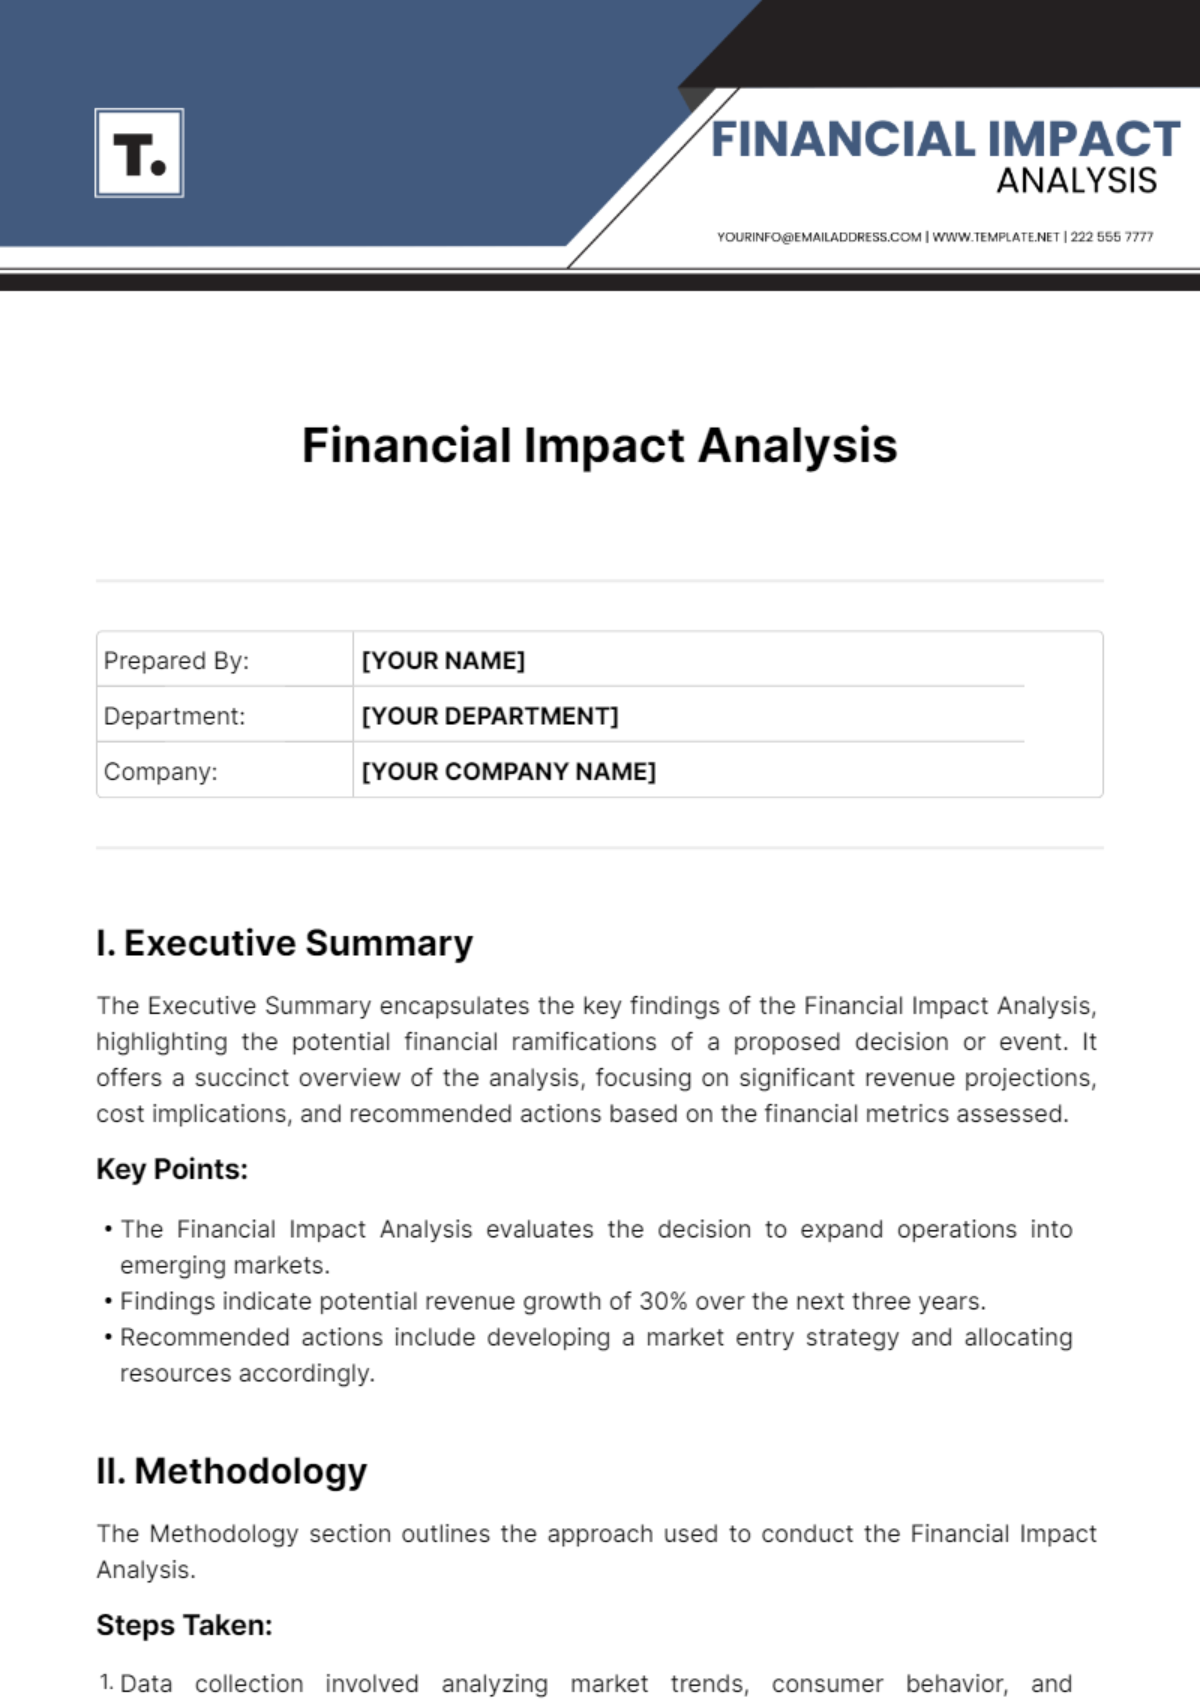 Financial Impact Analysis Template